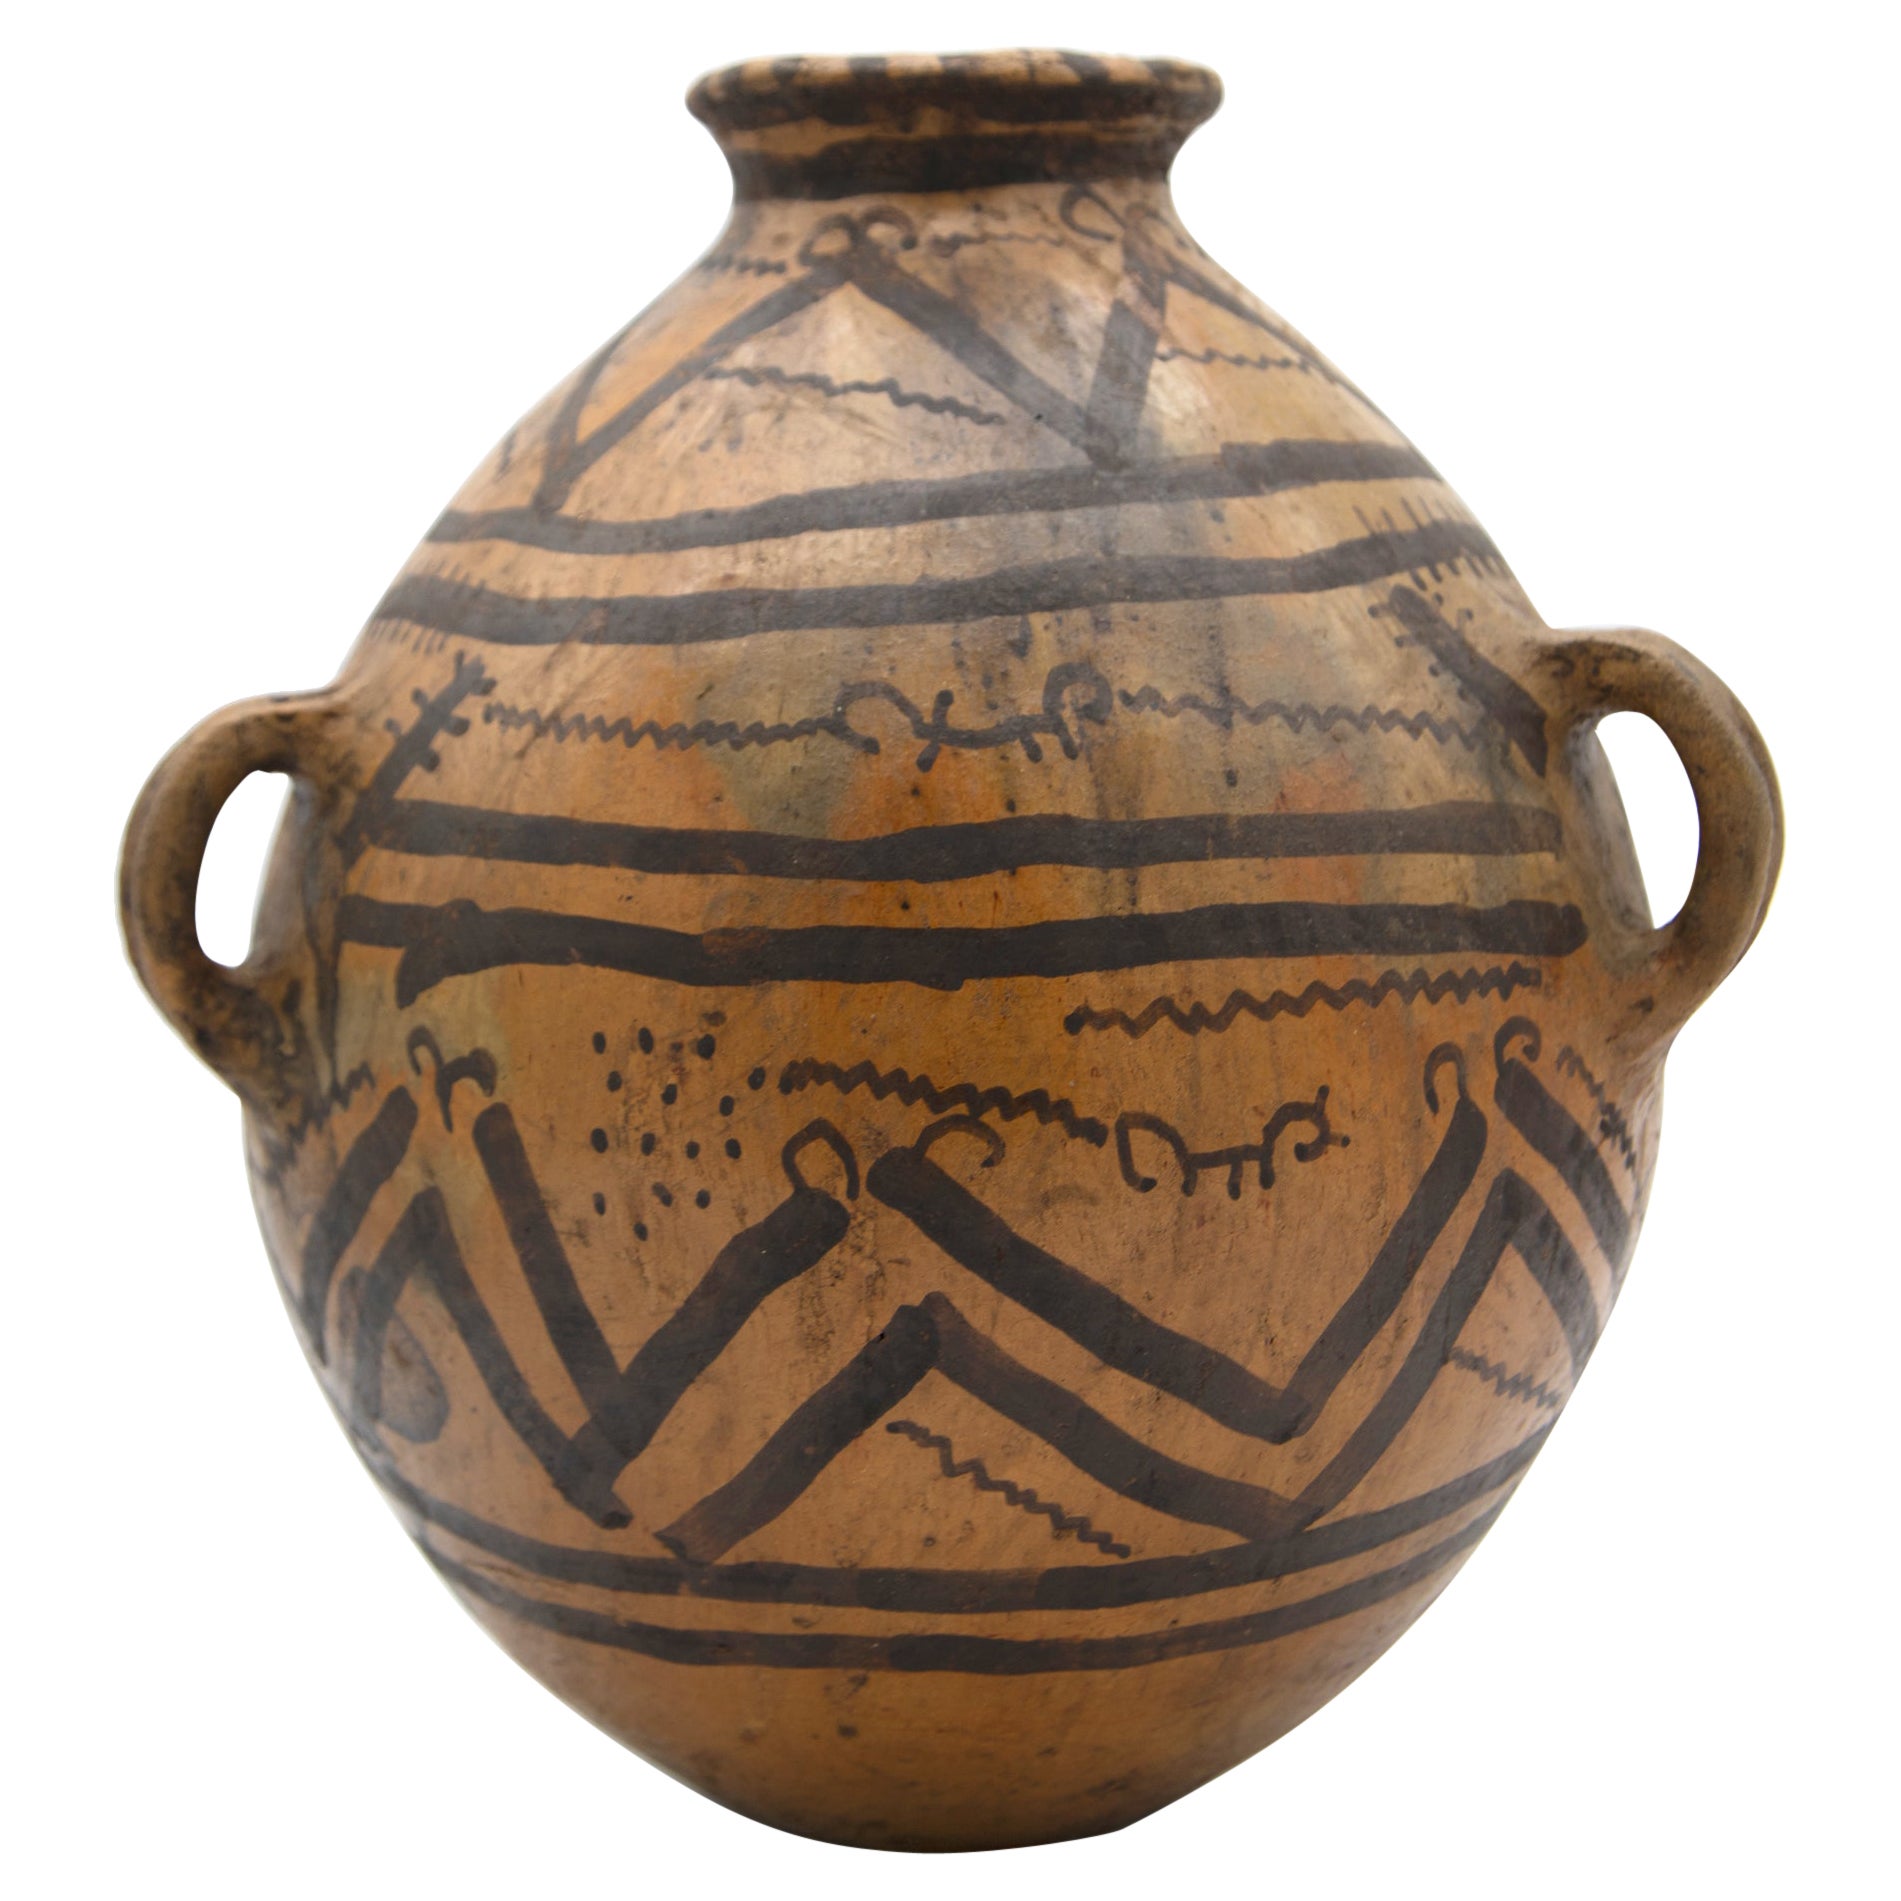 Mayan Pre-Columbian Style Large Pot with Geometric Drawings